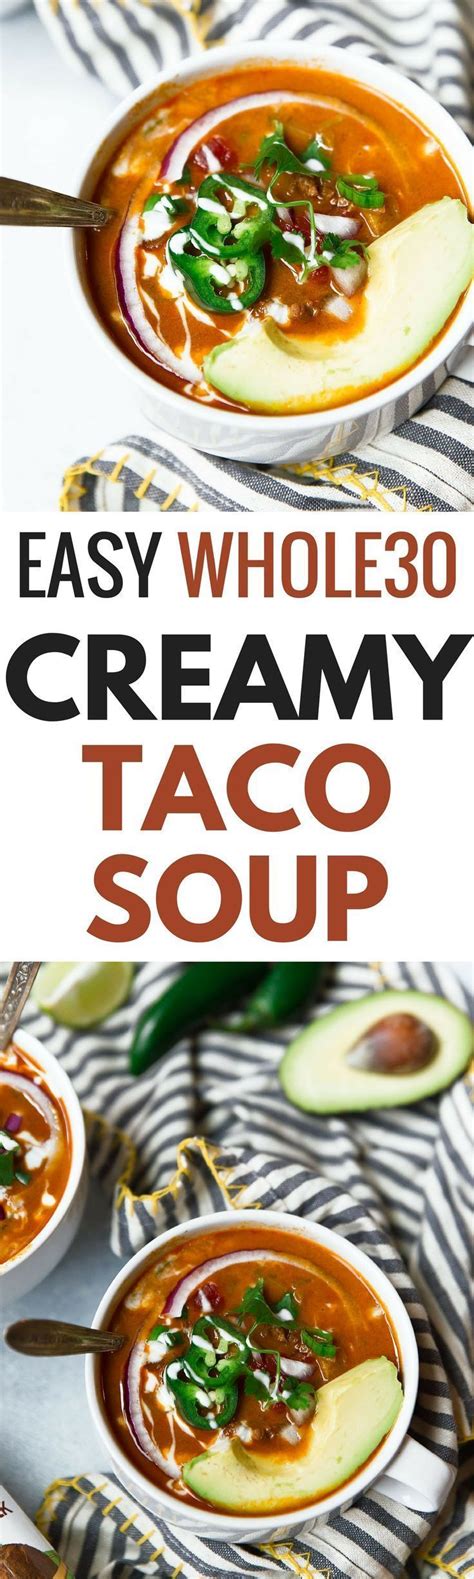 No rain checks except where required by law. Whole30 Creamy Taco Soup | Recipe | Whole food recipes ...